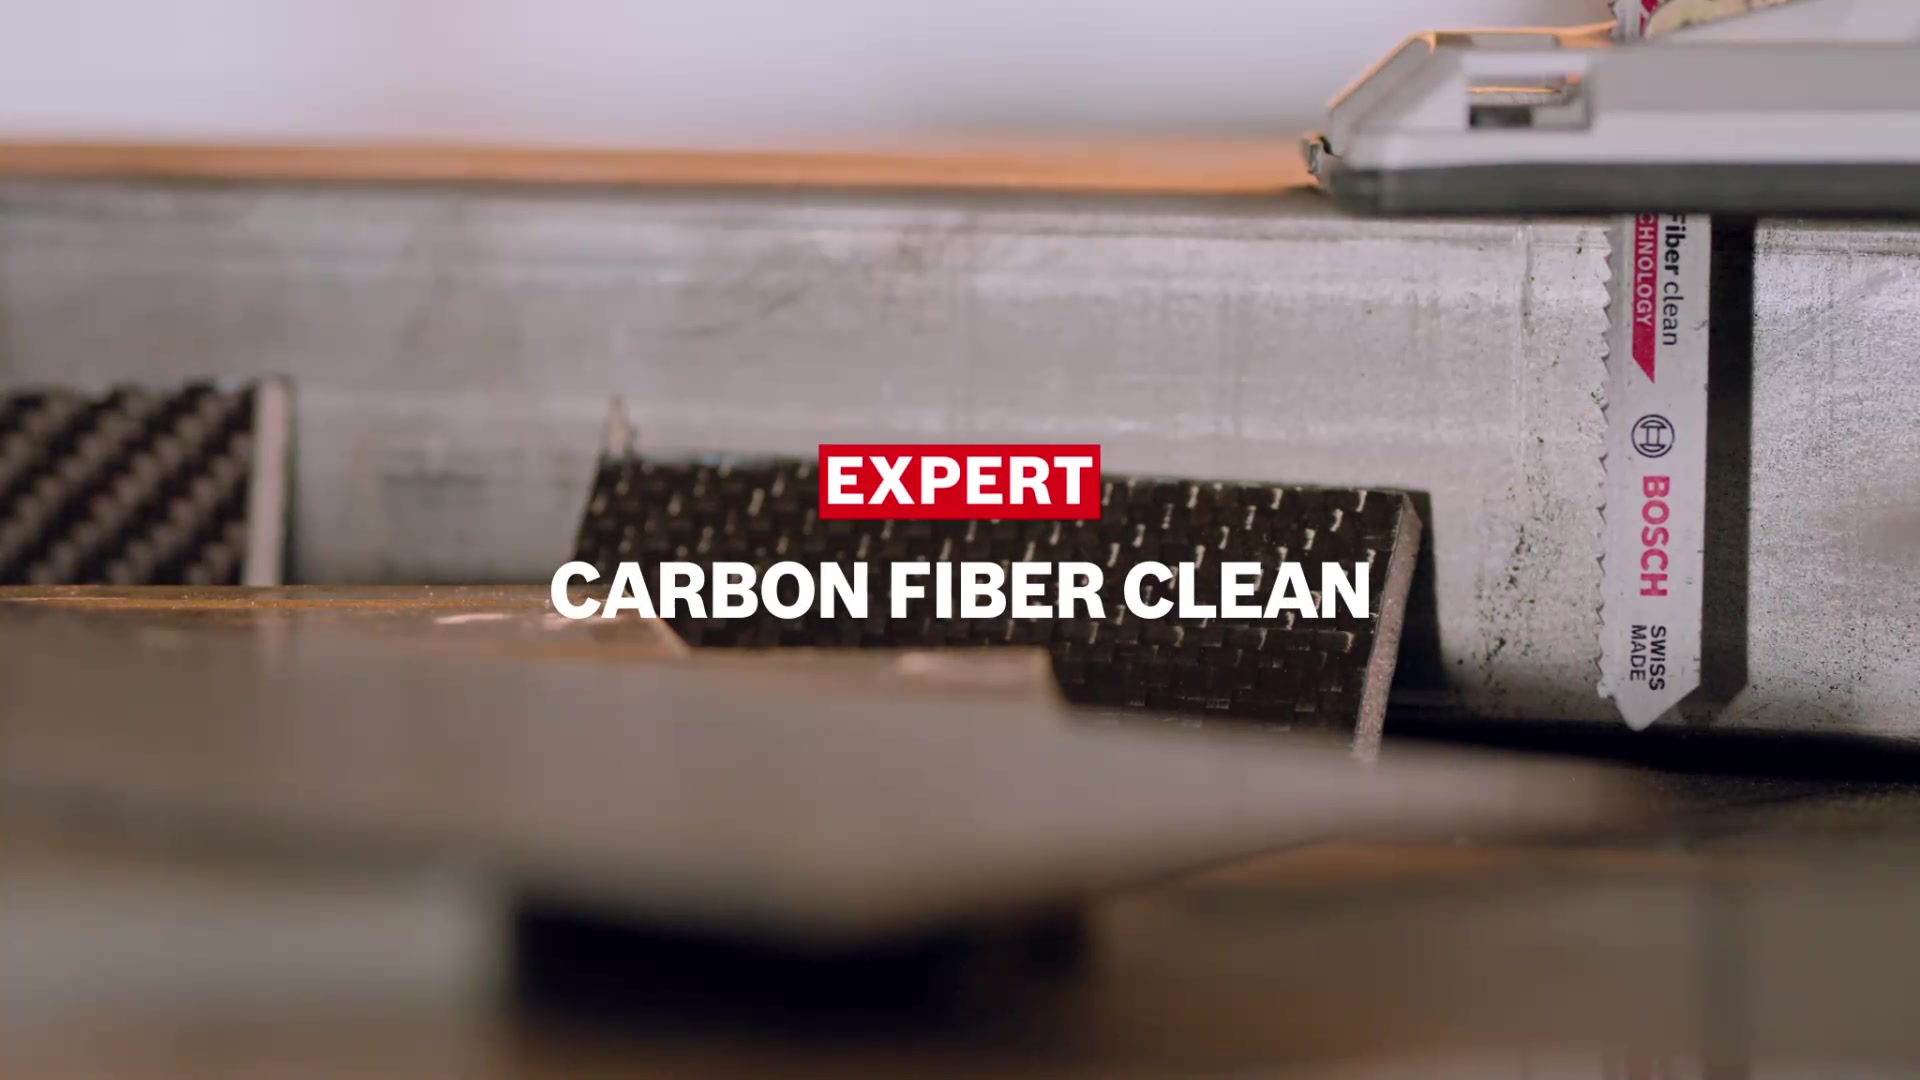 EXPERT Carbon Fiber Clean